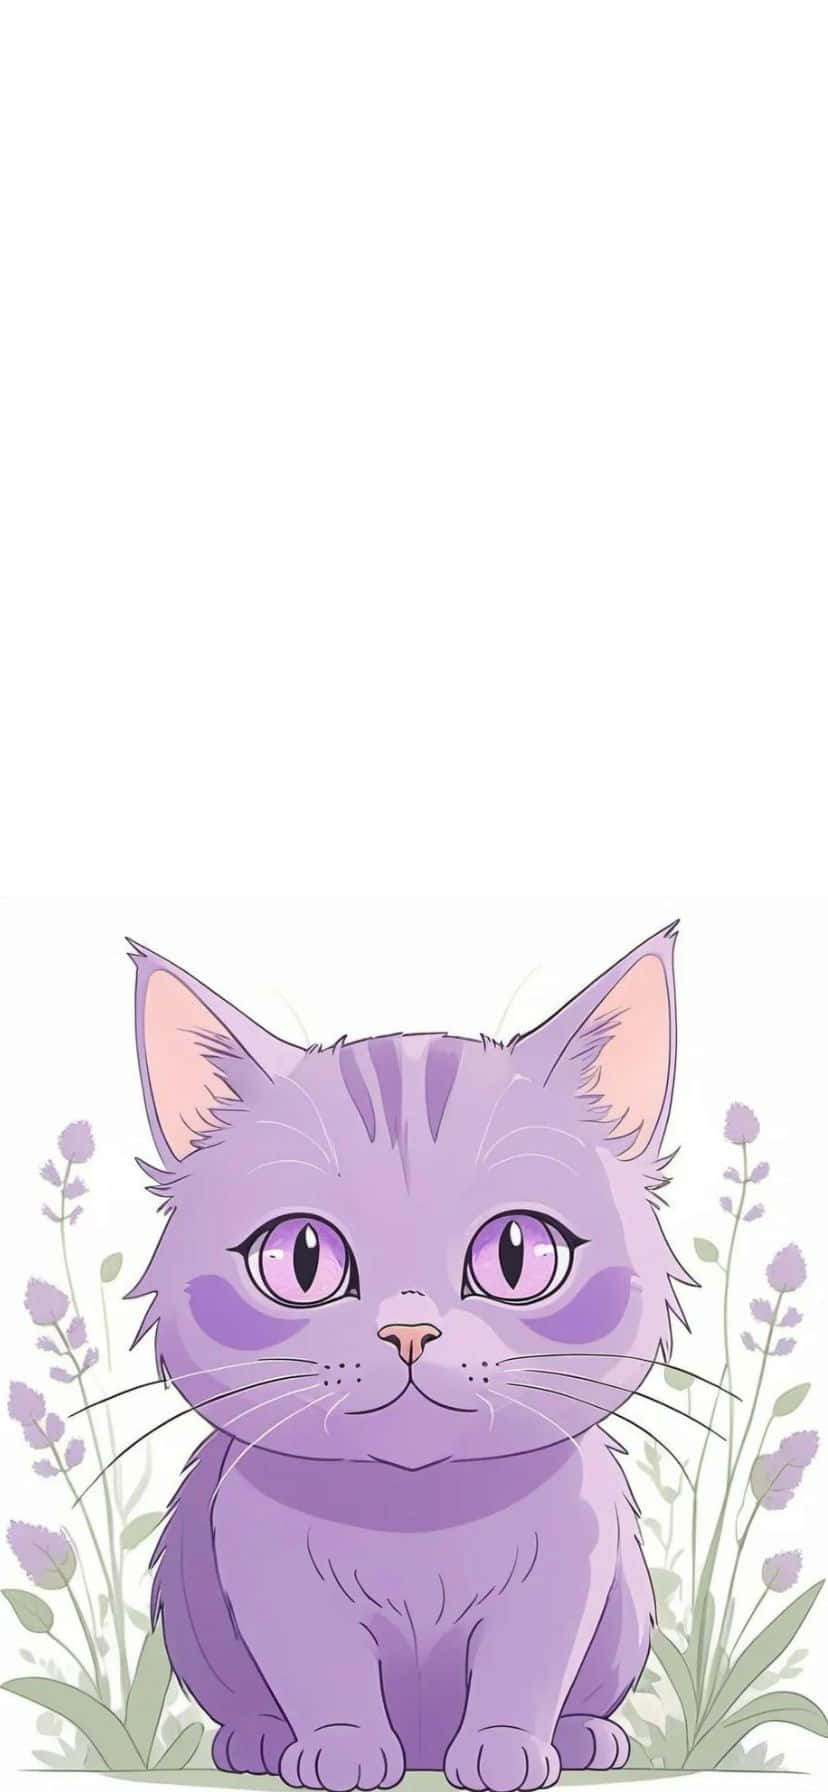 Purple Cat Illustration Wallpaper